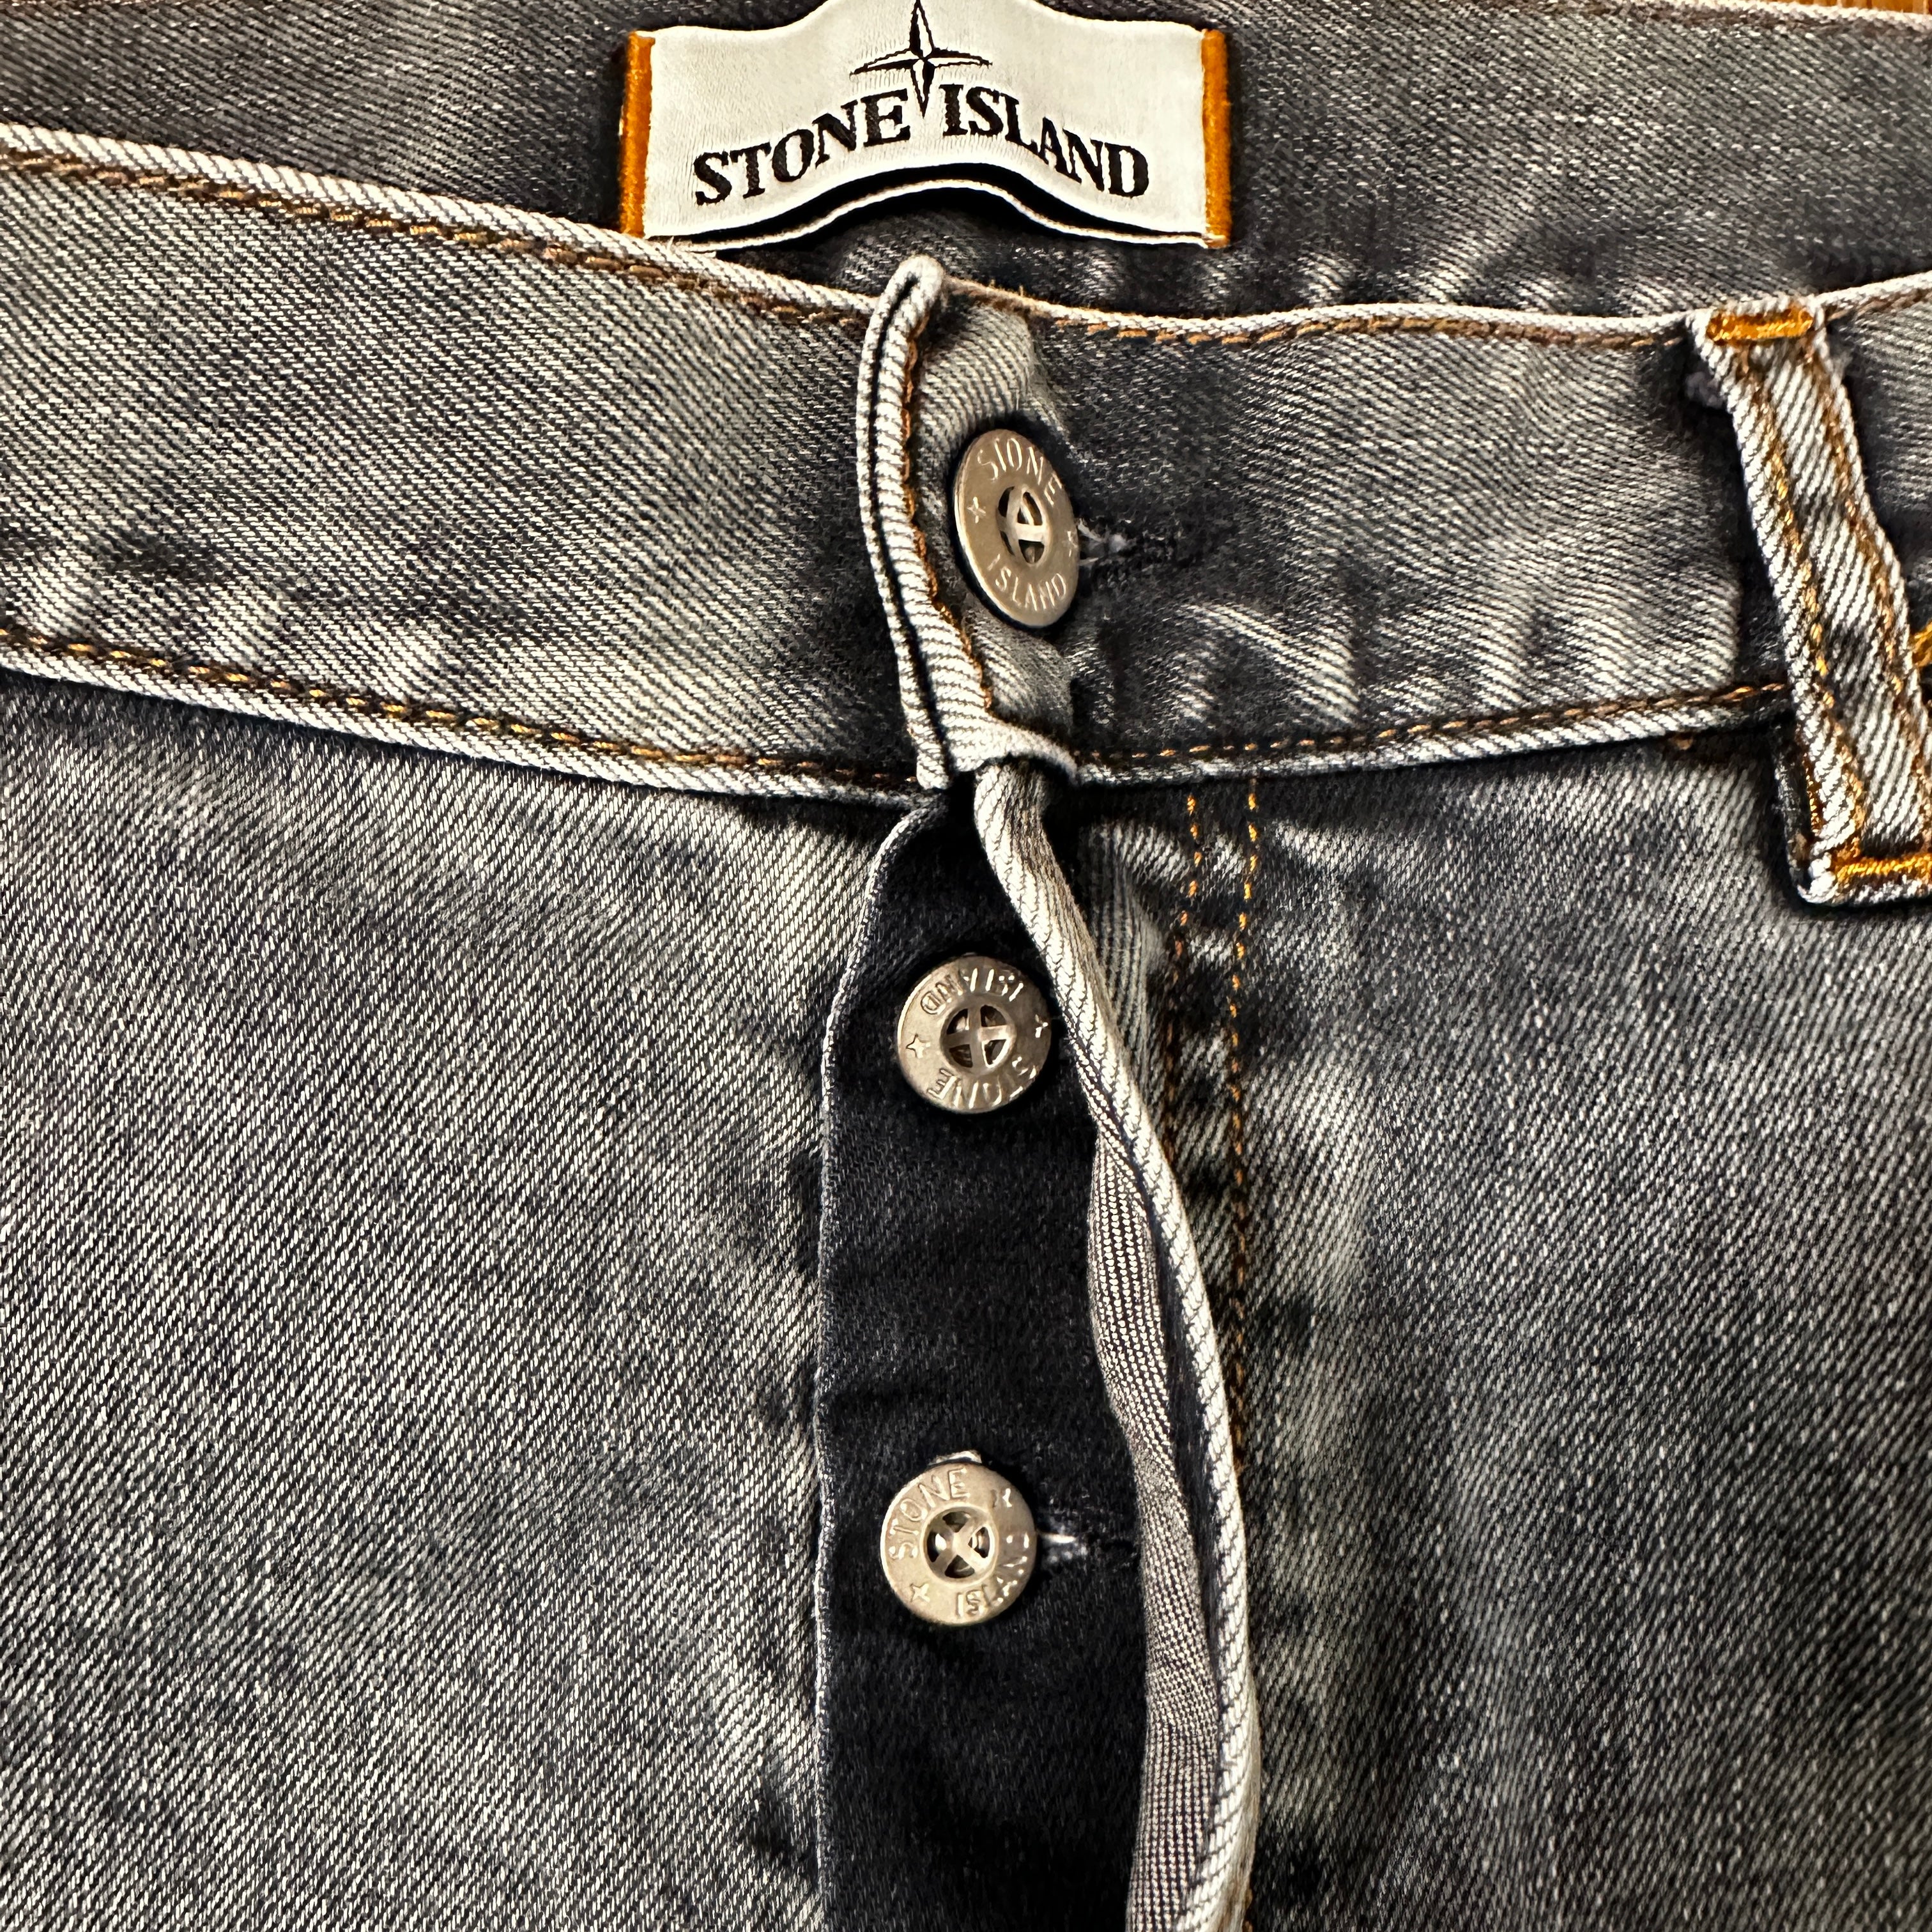 Stone Island Men's Denim Jeans size 30 | eBay